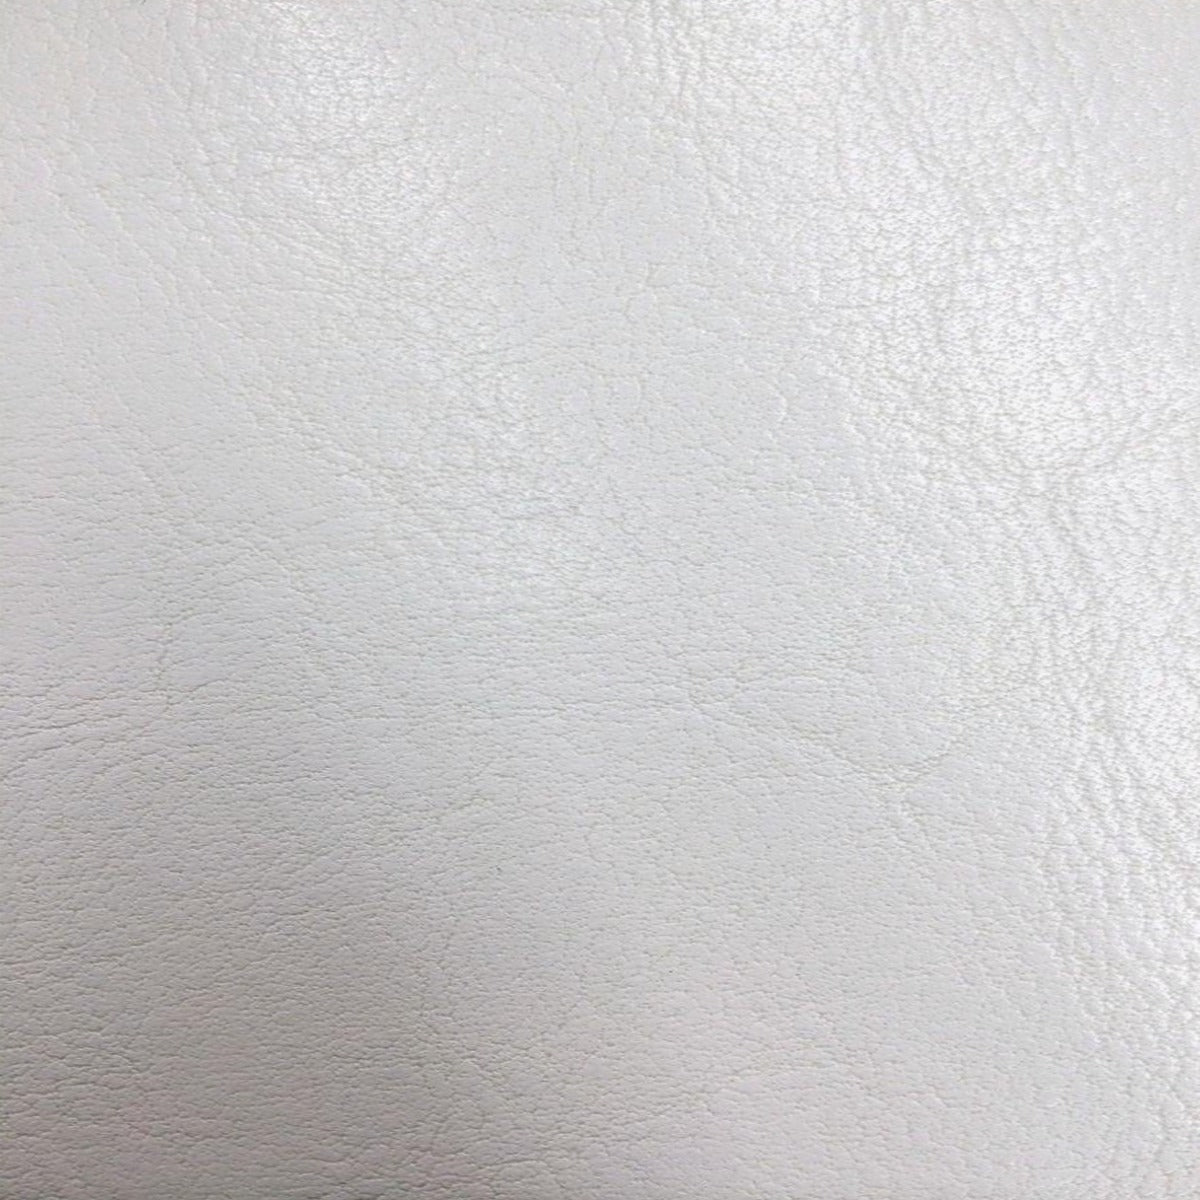 White Amarillo Grain Shiny PVC Leather Vinyl Fabric - Fashion Fabrics Los Angeles 